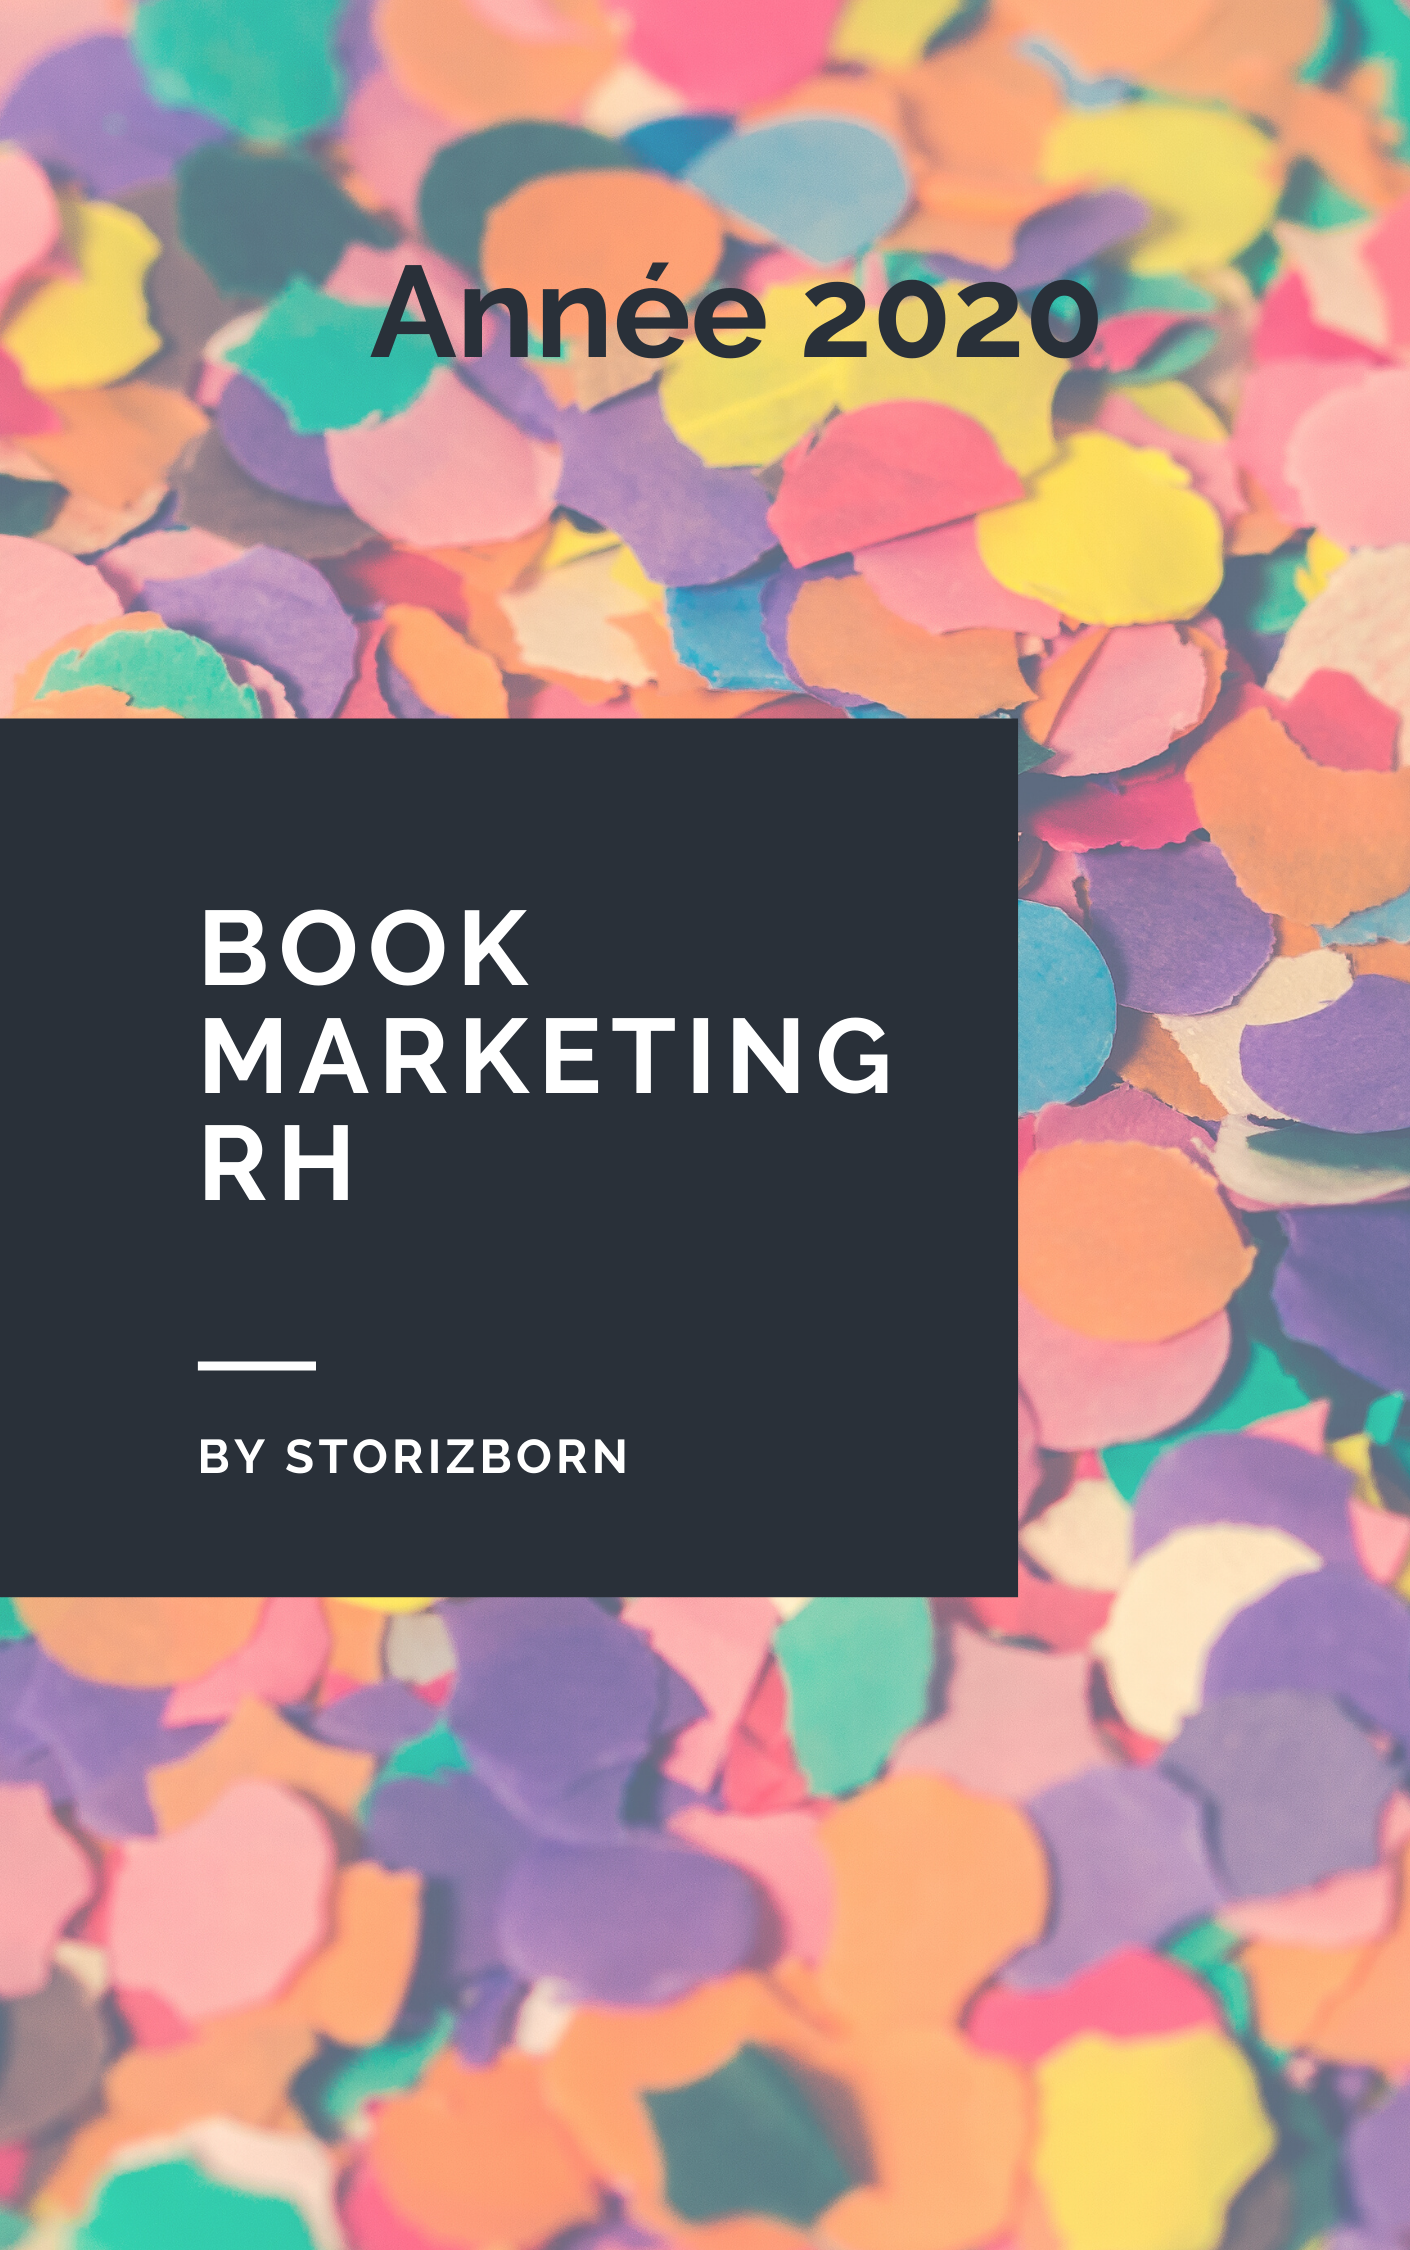 Book marketing RH - année 2020